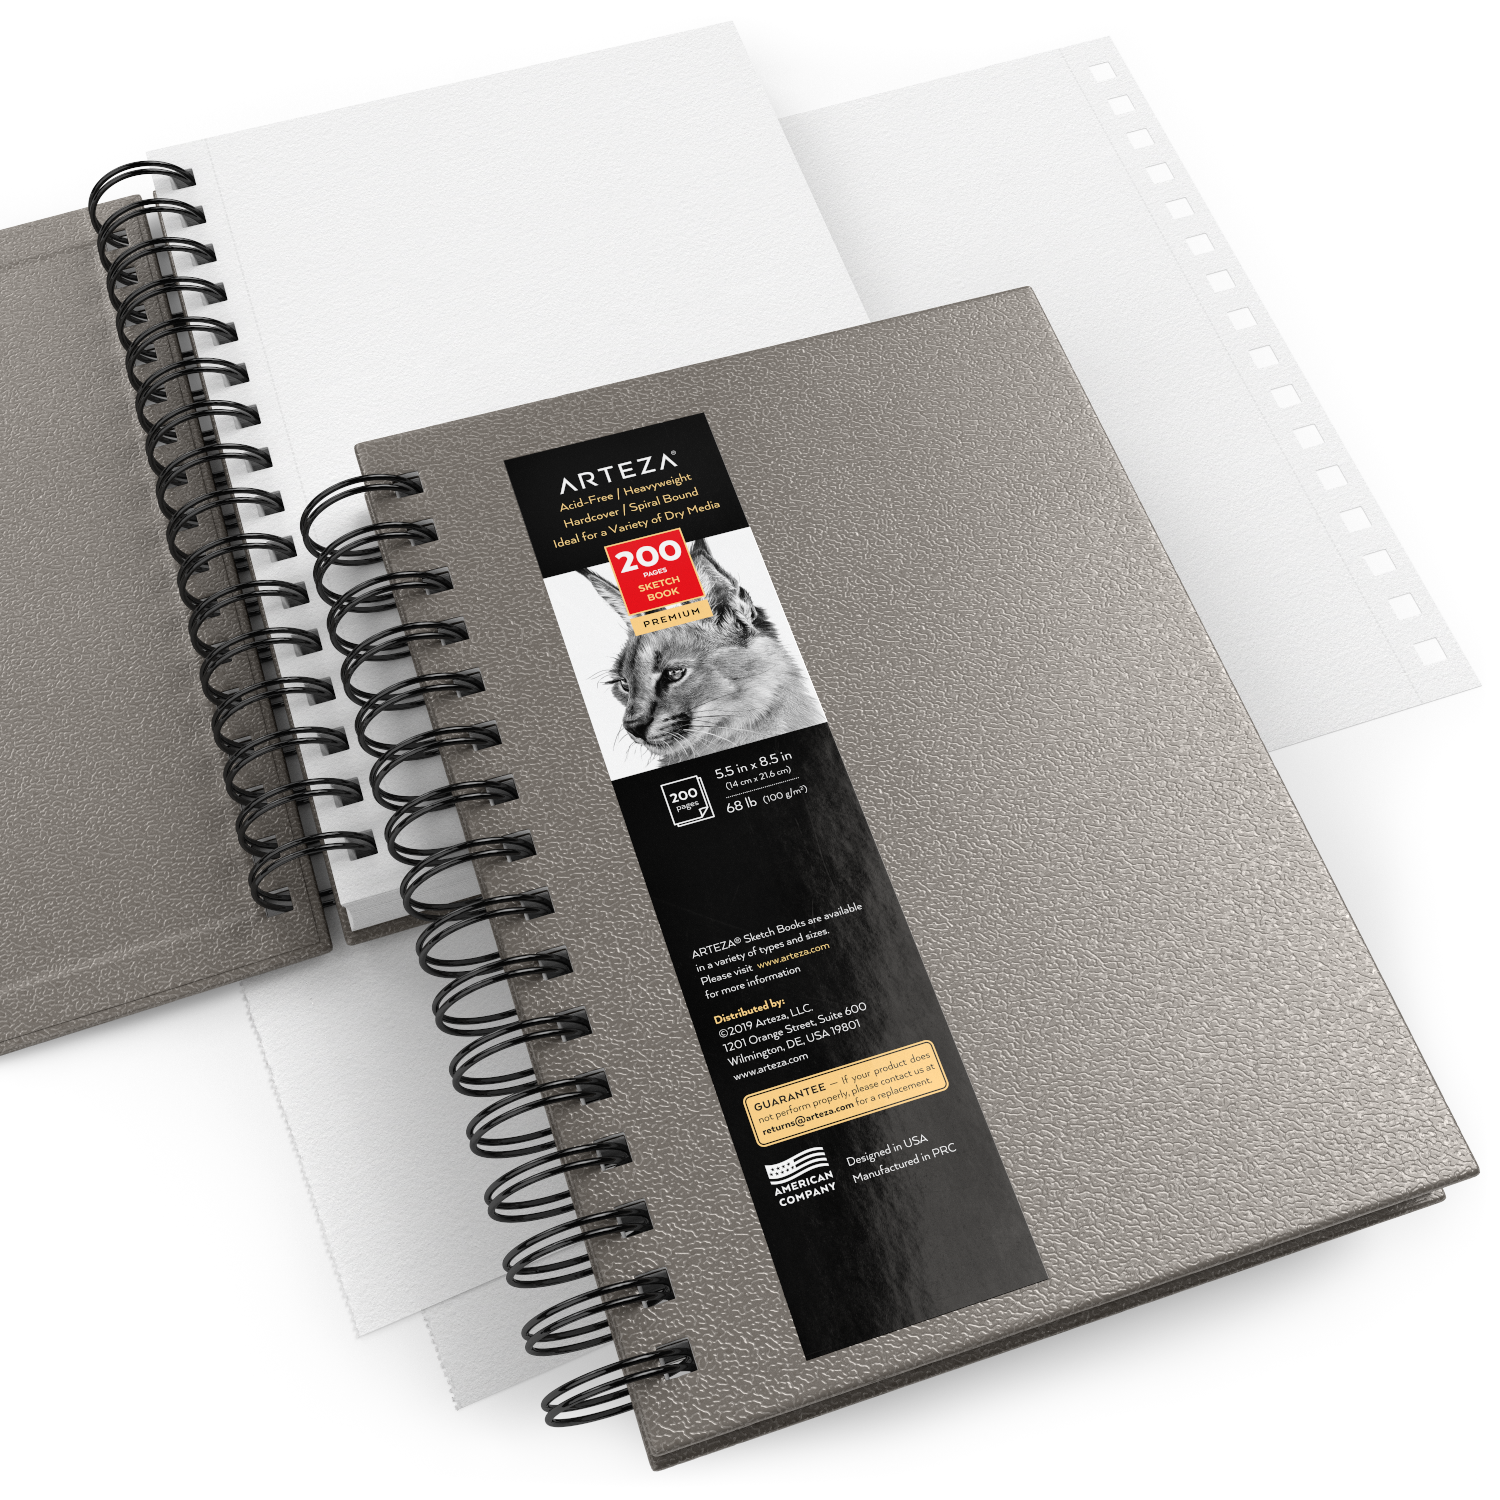 Sketchbook, Spiral-Bound Hardcover, Gray, 5.5 x 8.5” - Pack of 3